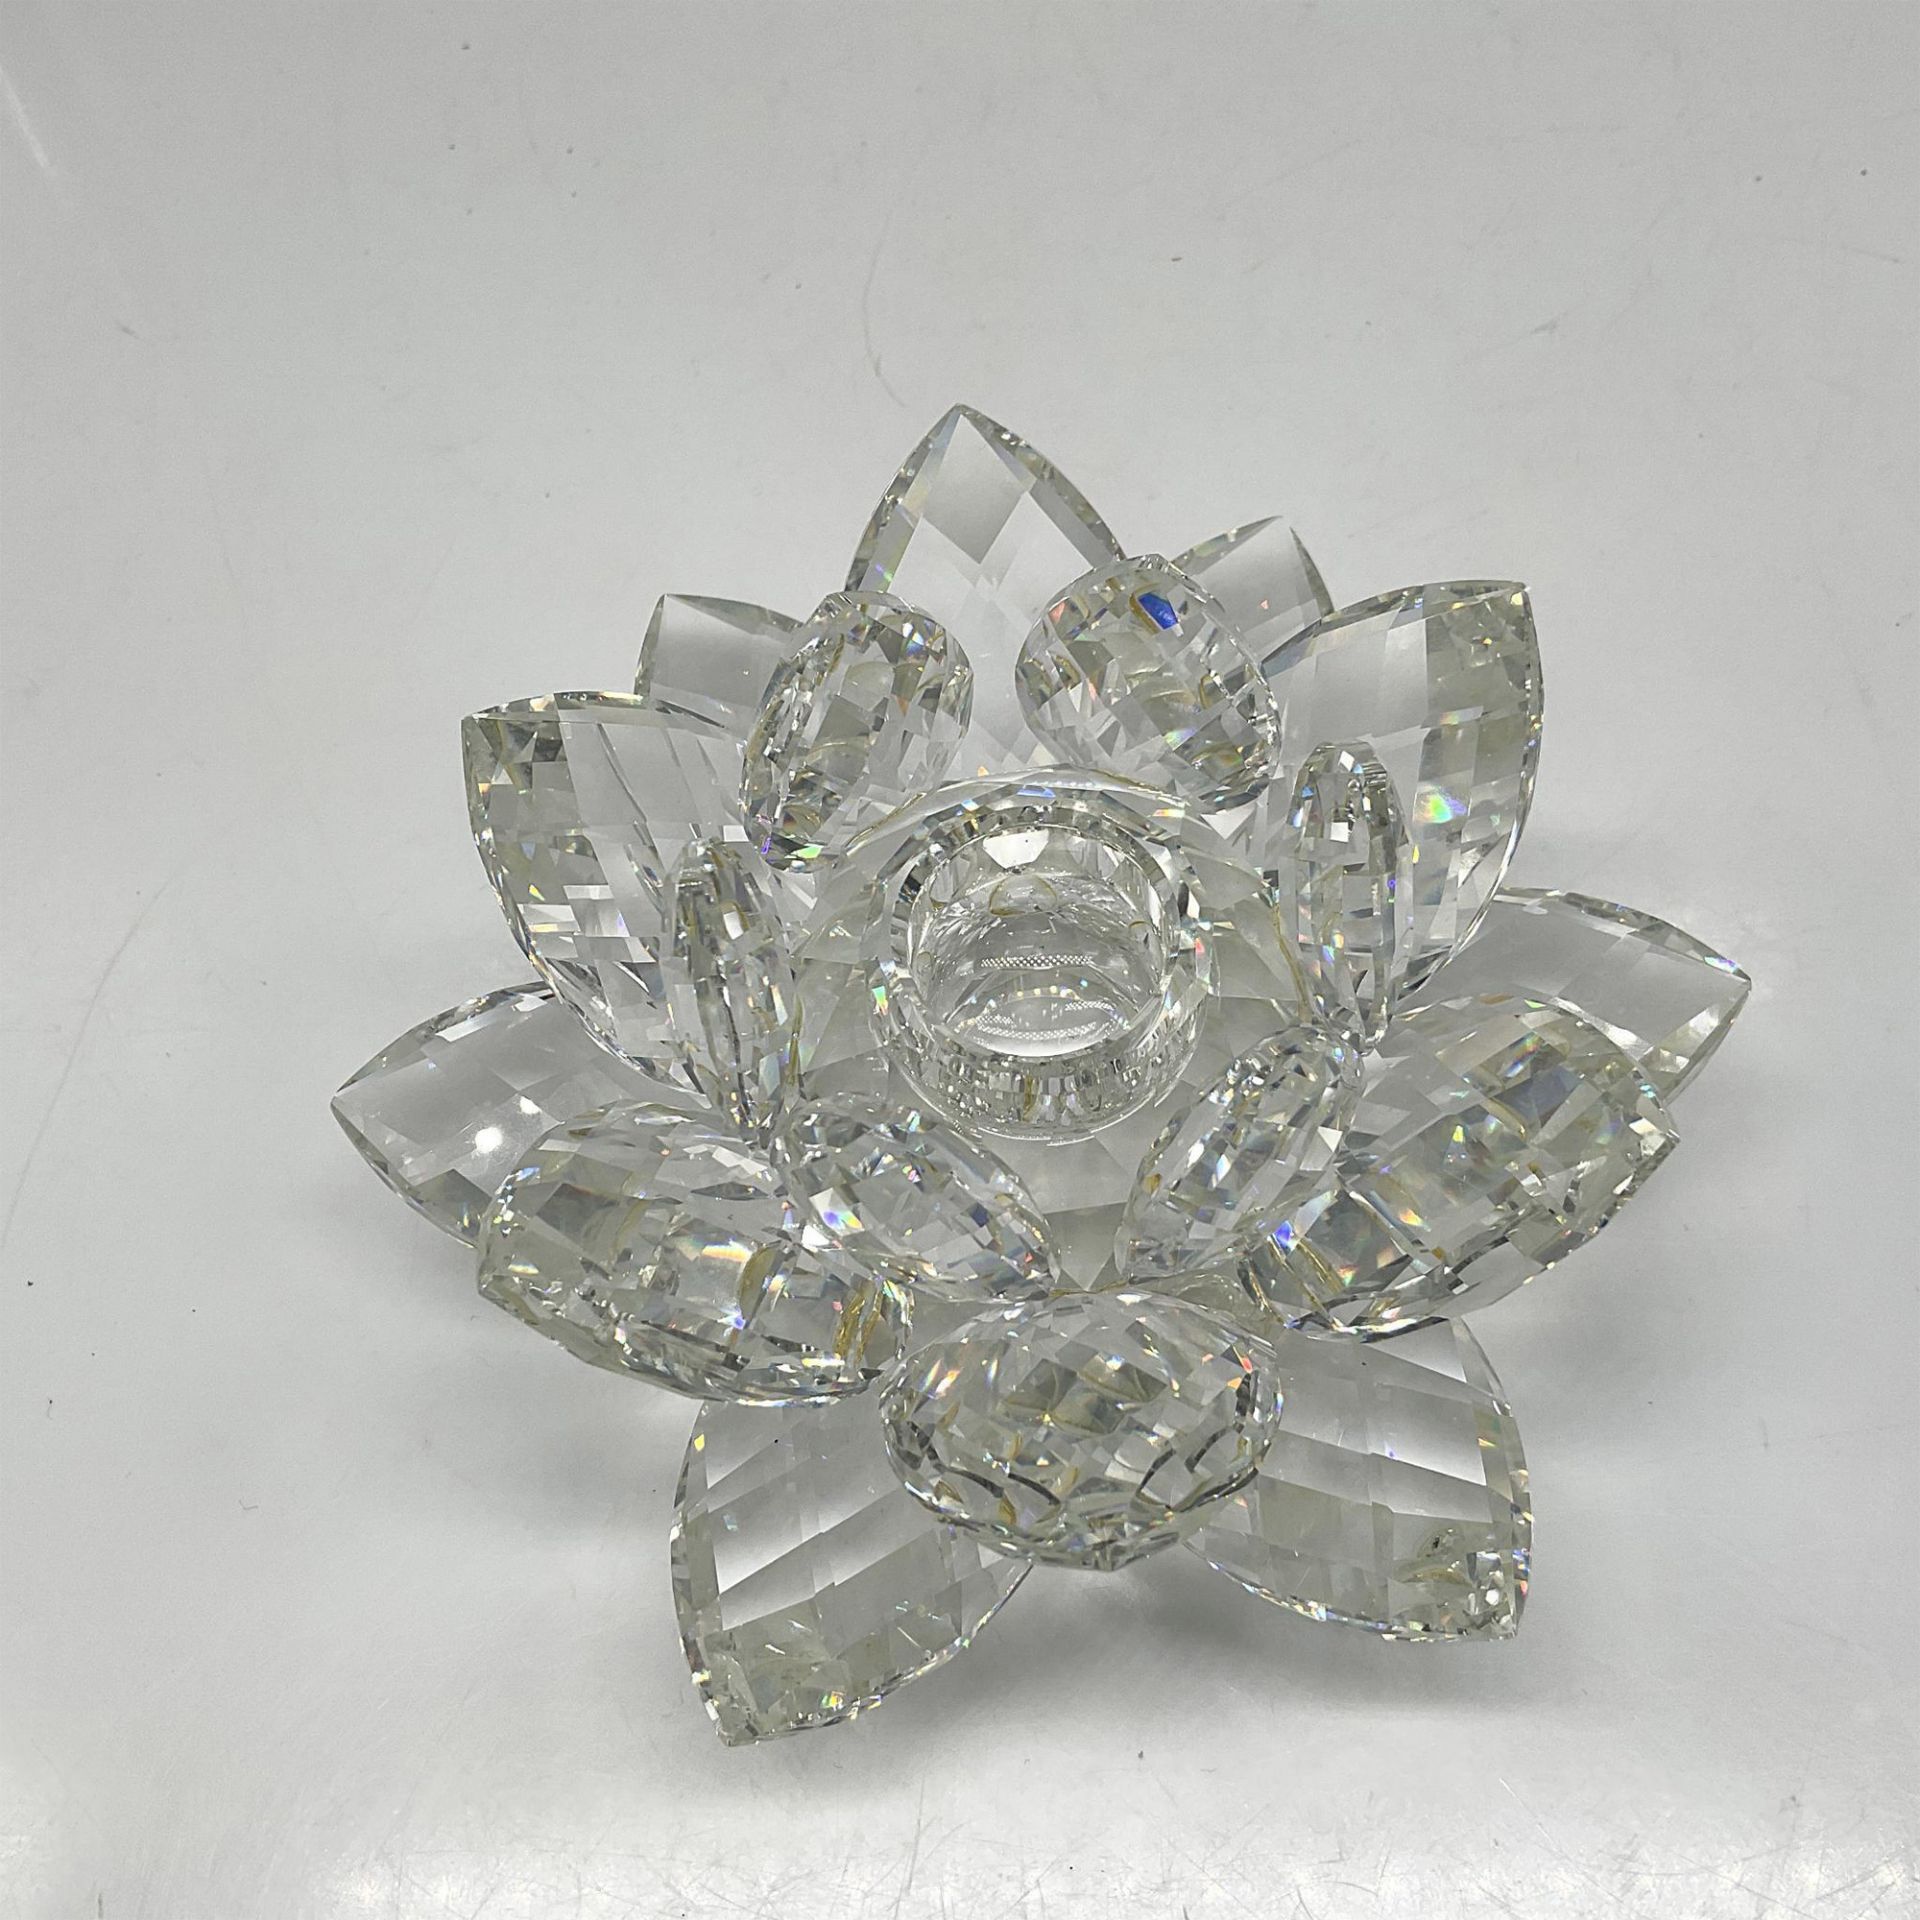 Swarovski Silver Crystal Candleholder, Large Water Lily - Image 2 of 4